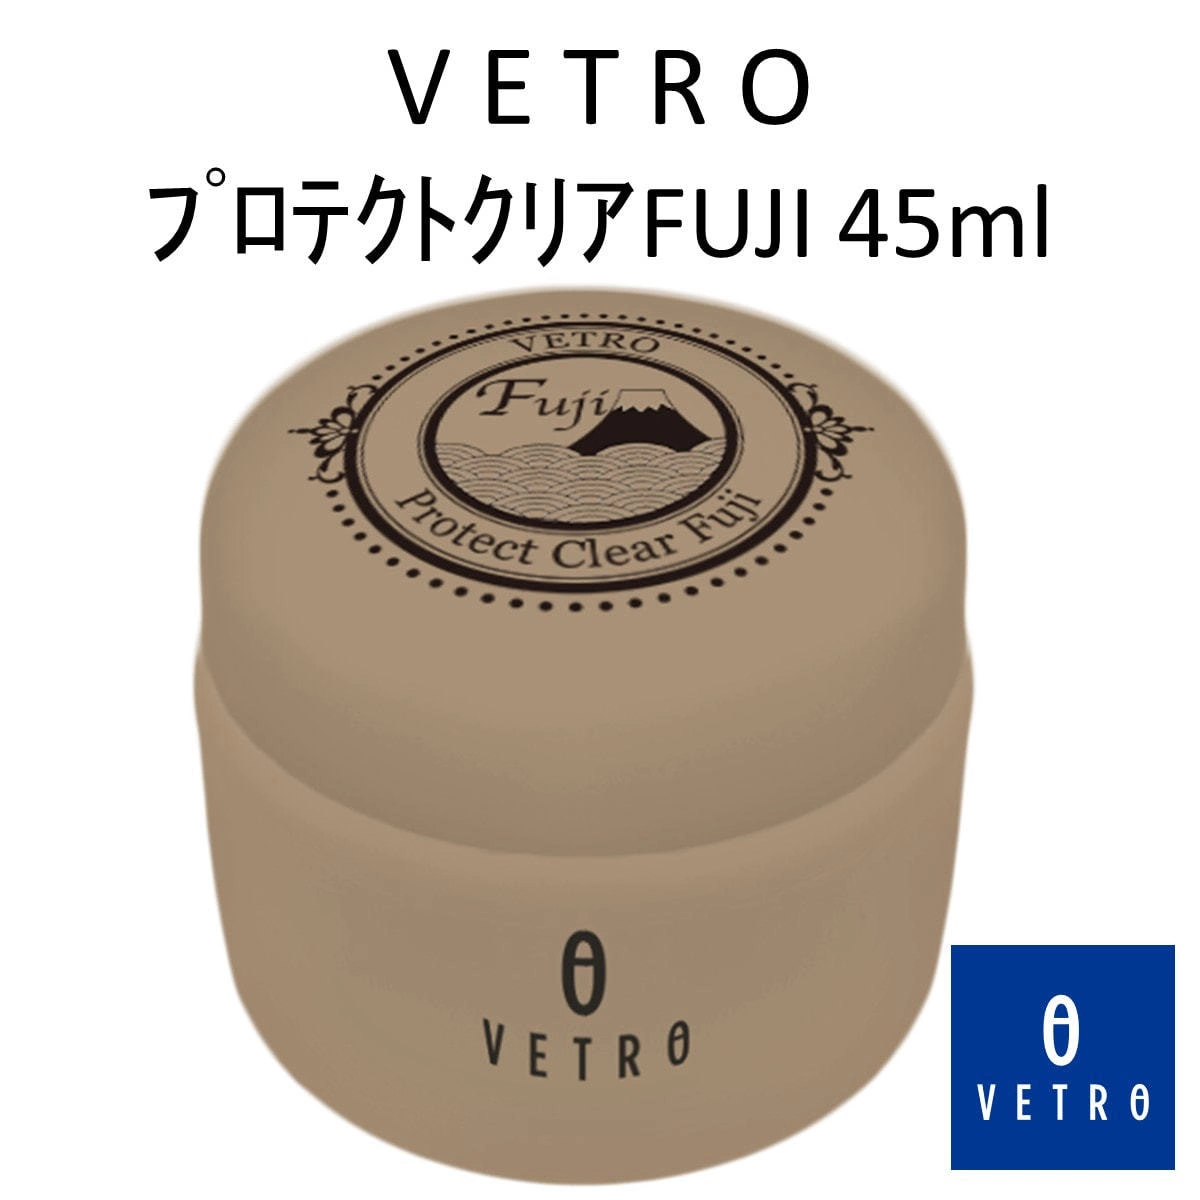 VETRO (ベトロ) プロテクトクリア FUJI 45ml (BF-45)